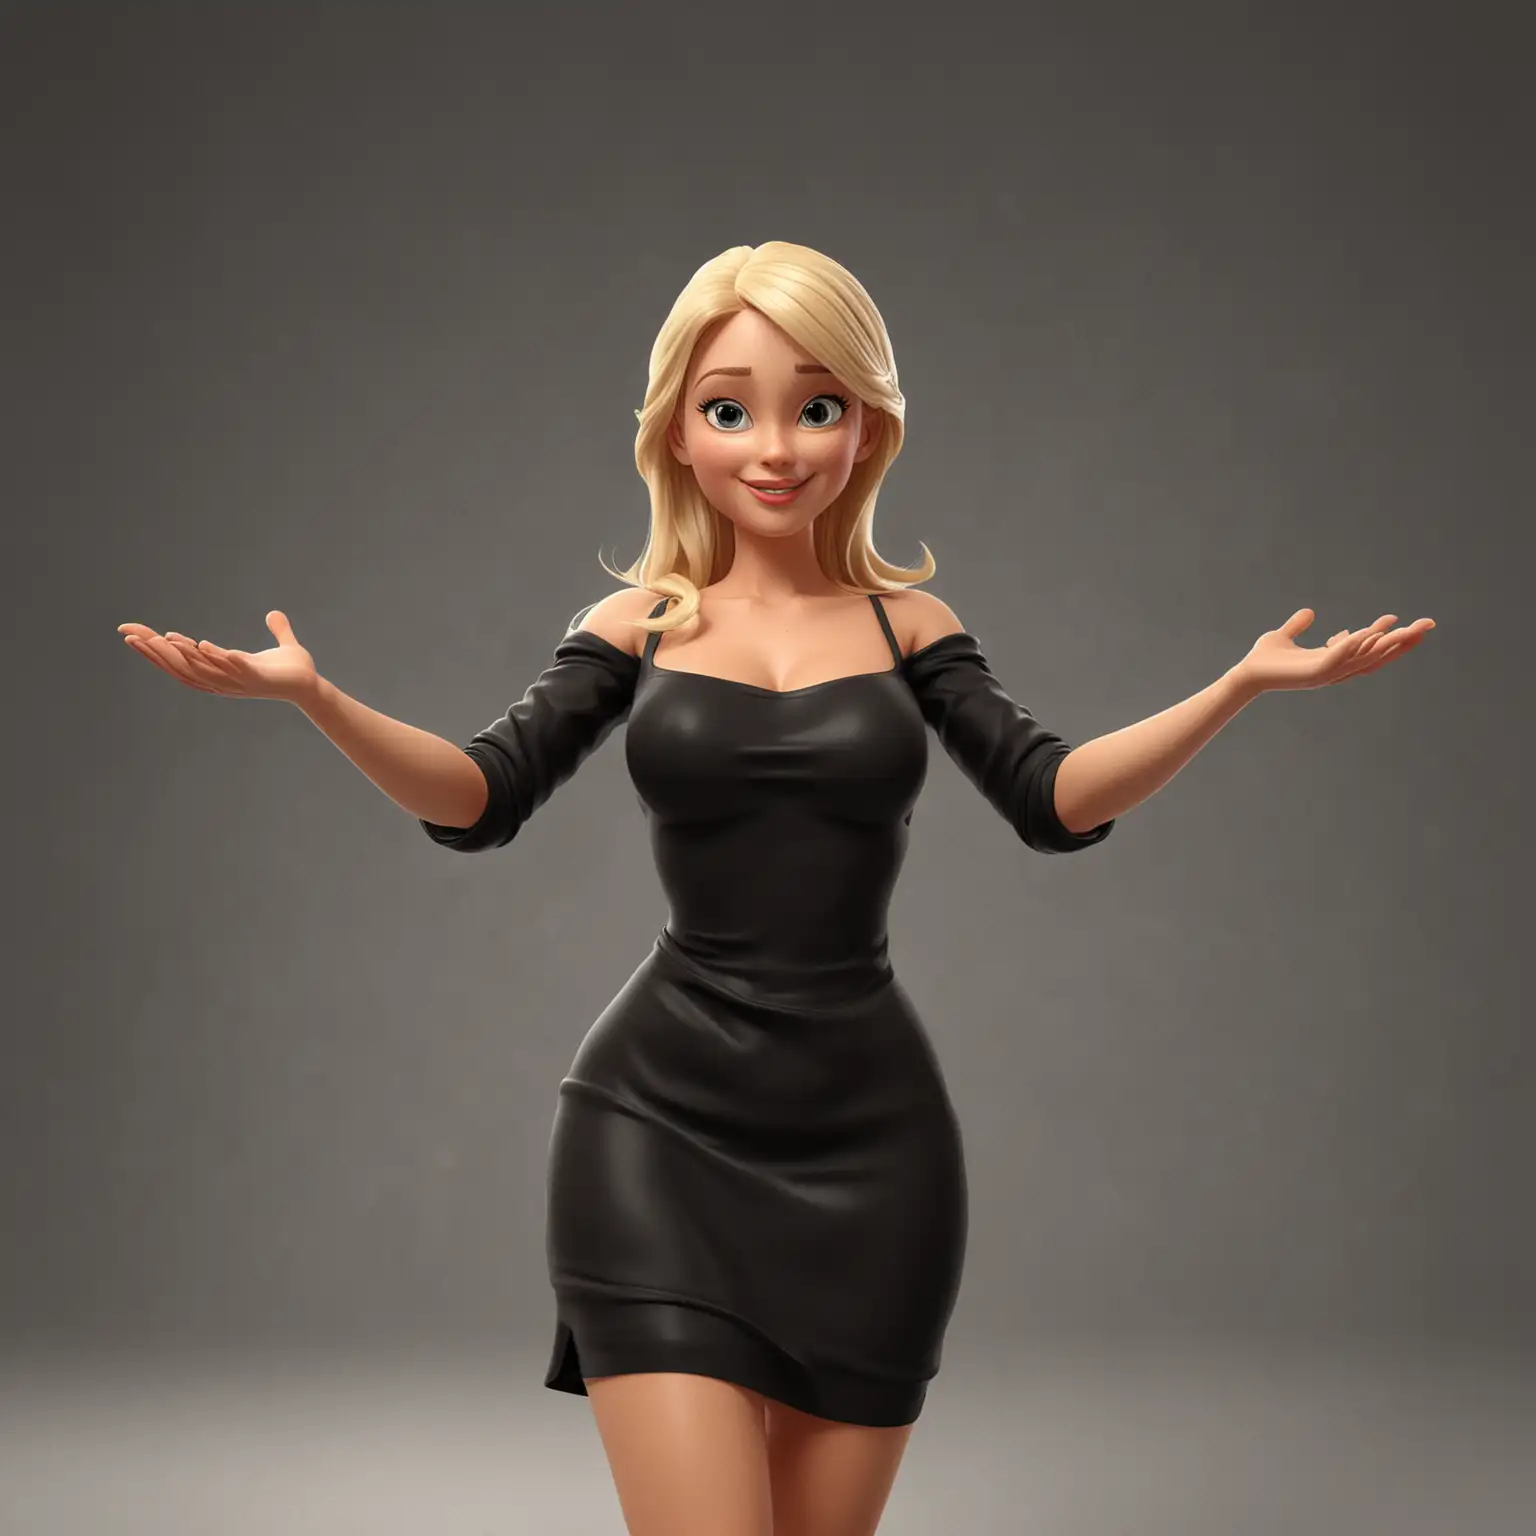 Beautiful-Blonde-Woman-in-Black-Dress-Spreading-Arms-3D-Cartoon